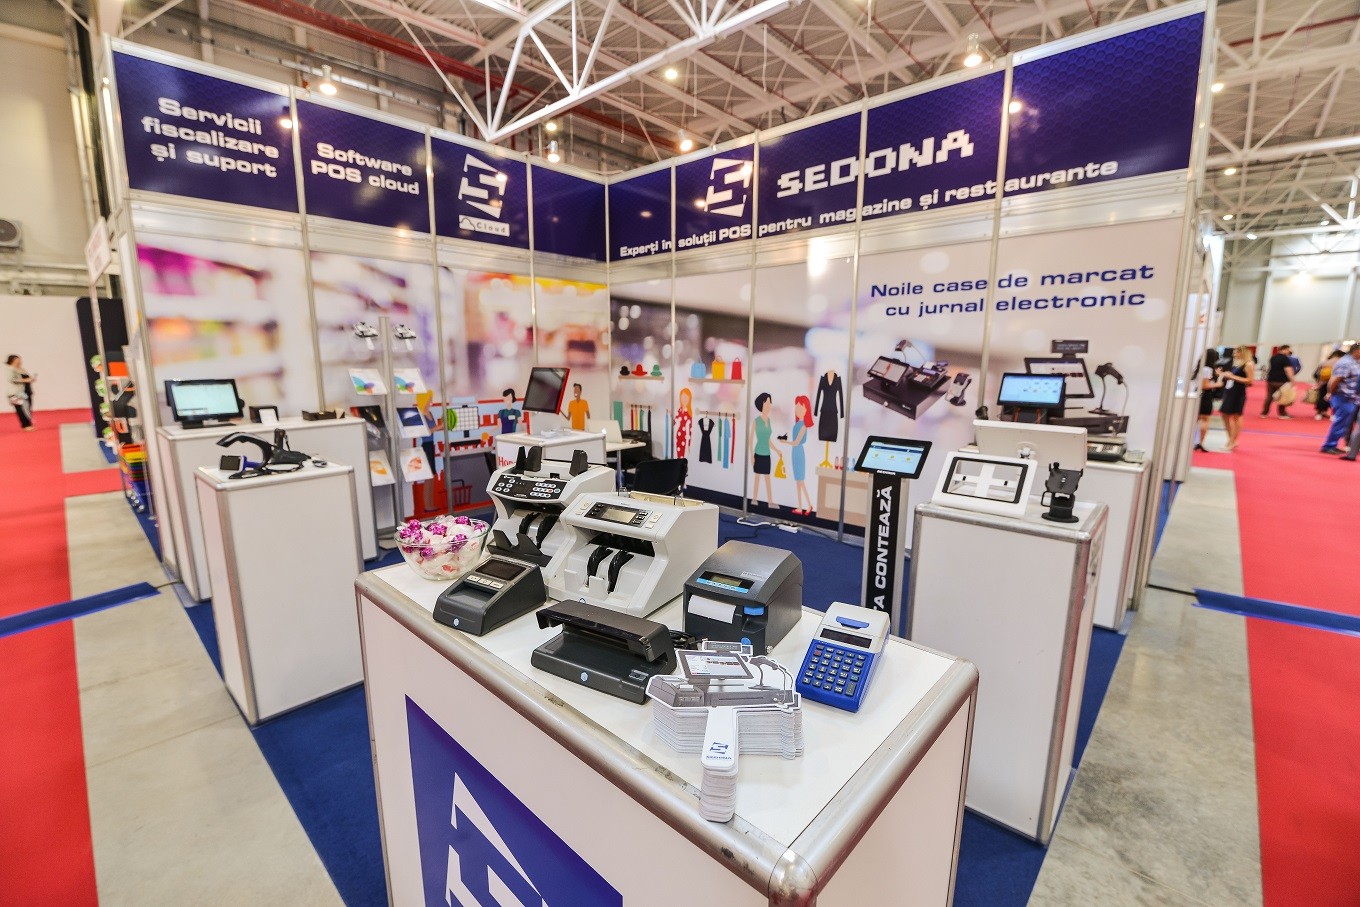 Sedona aduce noile case de marcat cu jurnal electronic la Expo Shop 2018